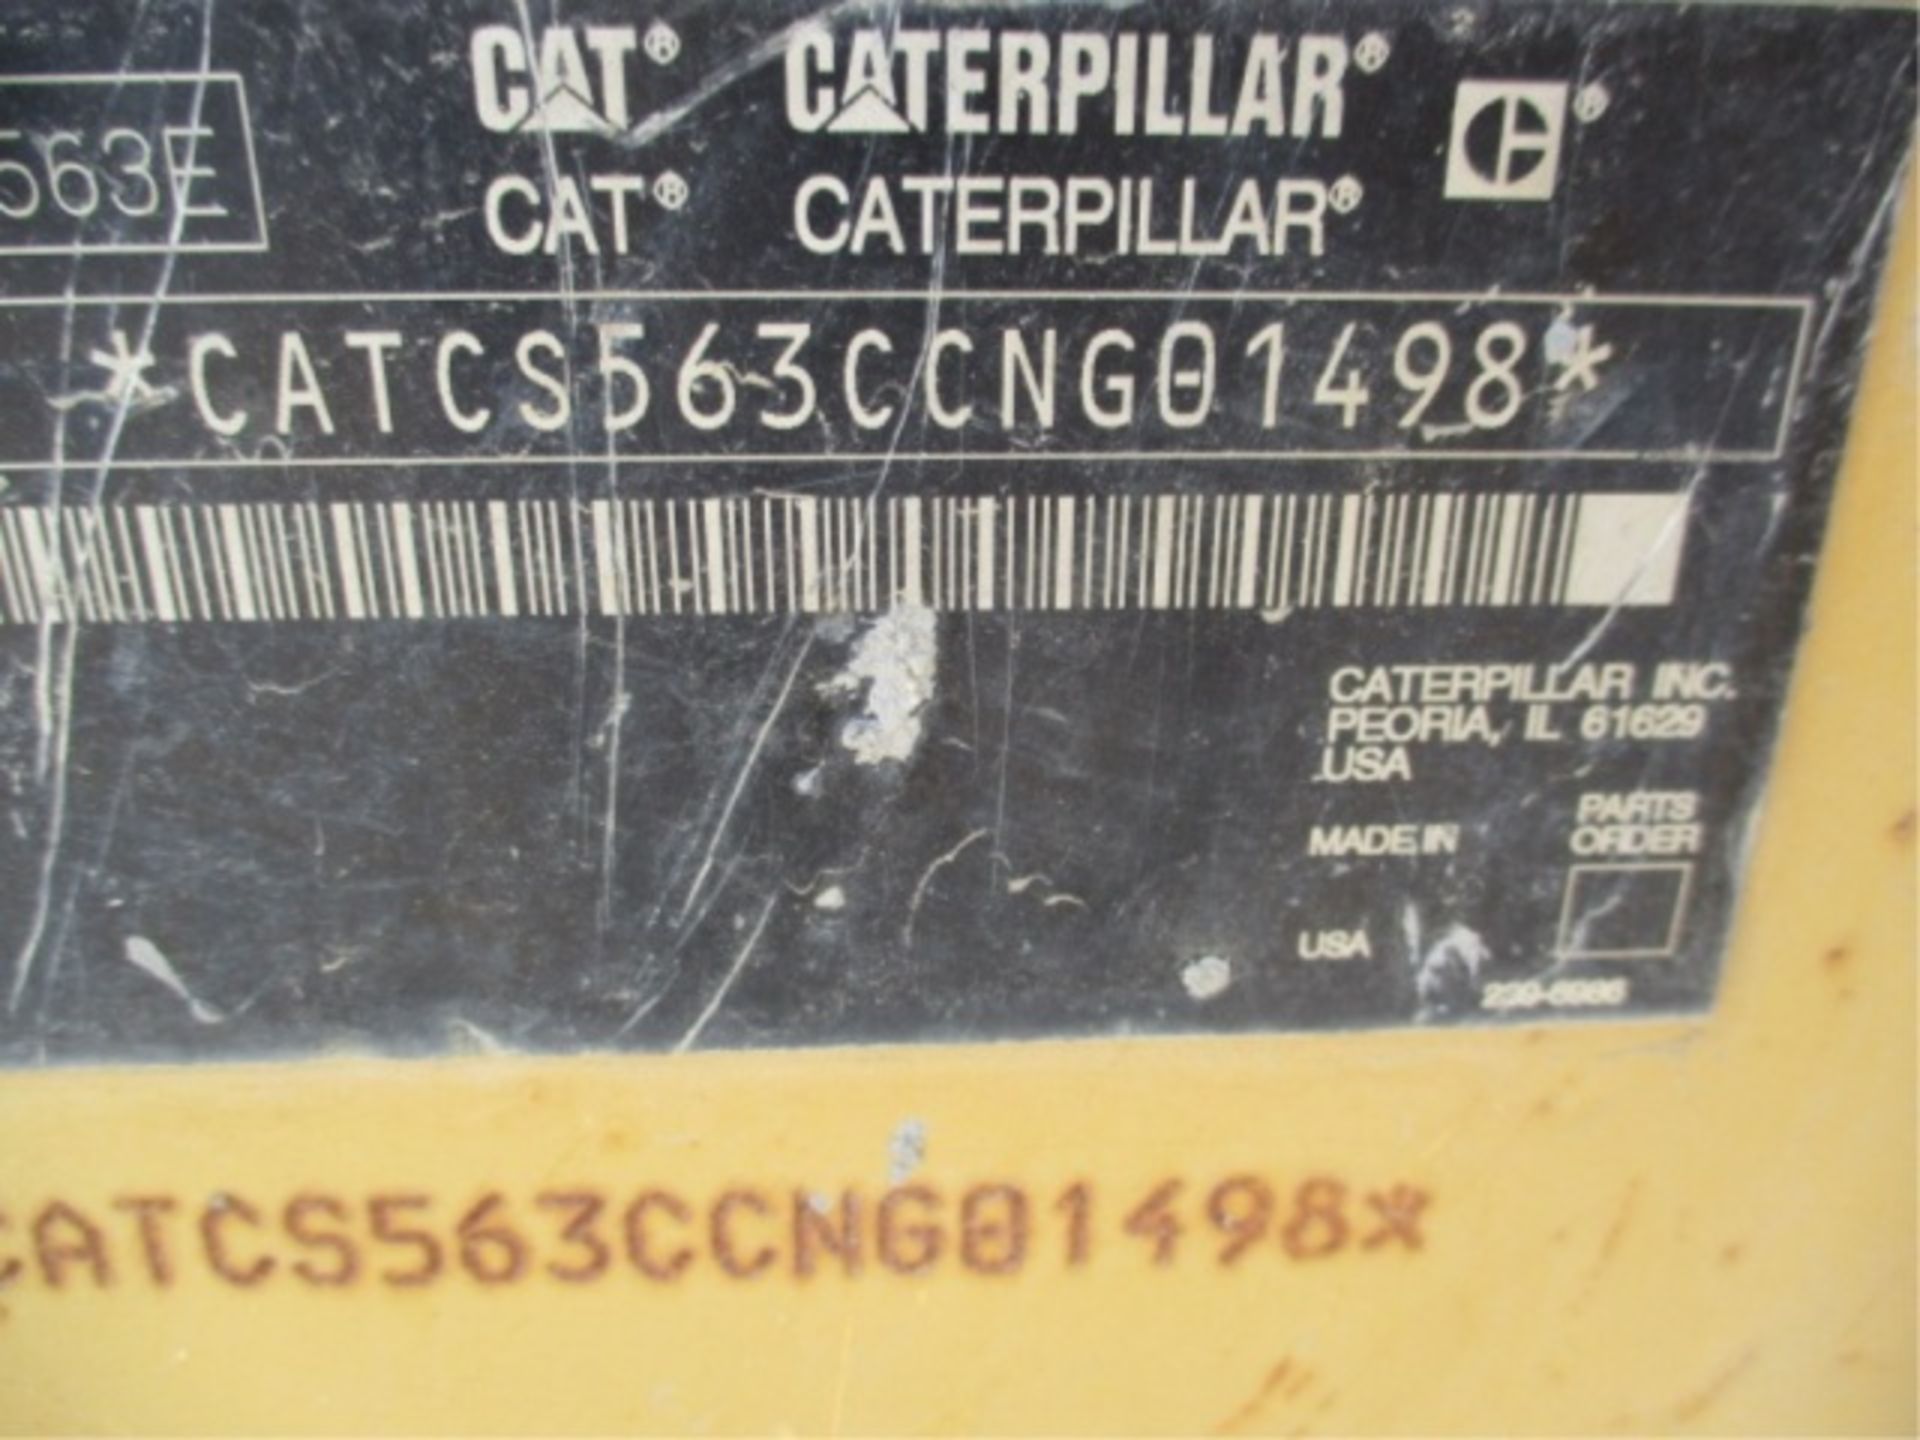 2006 Caterpillar CS-563E Vibratory Roller, Cat Diesel, 84" Drum, Canopy, S/N: CATC5563CCNG01498 - Image 57 of 65